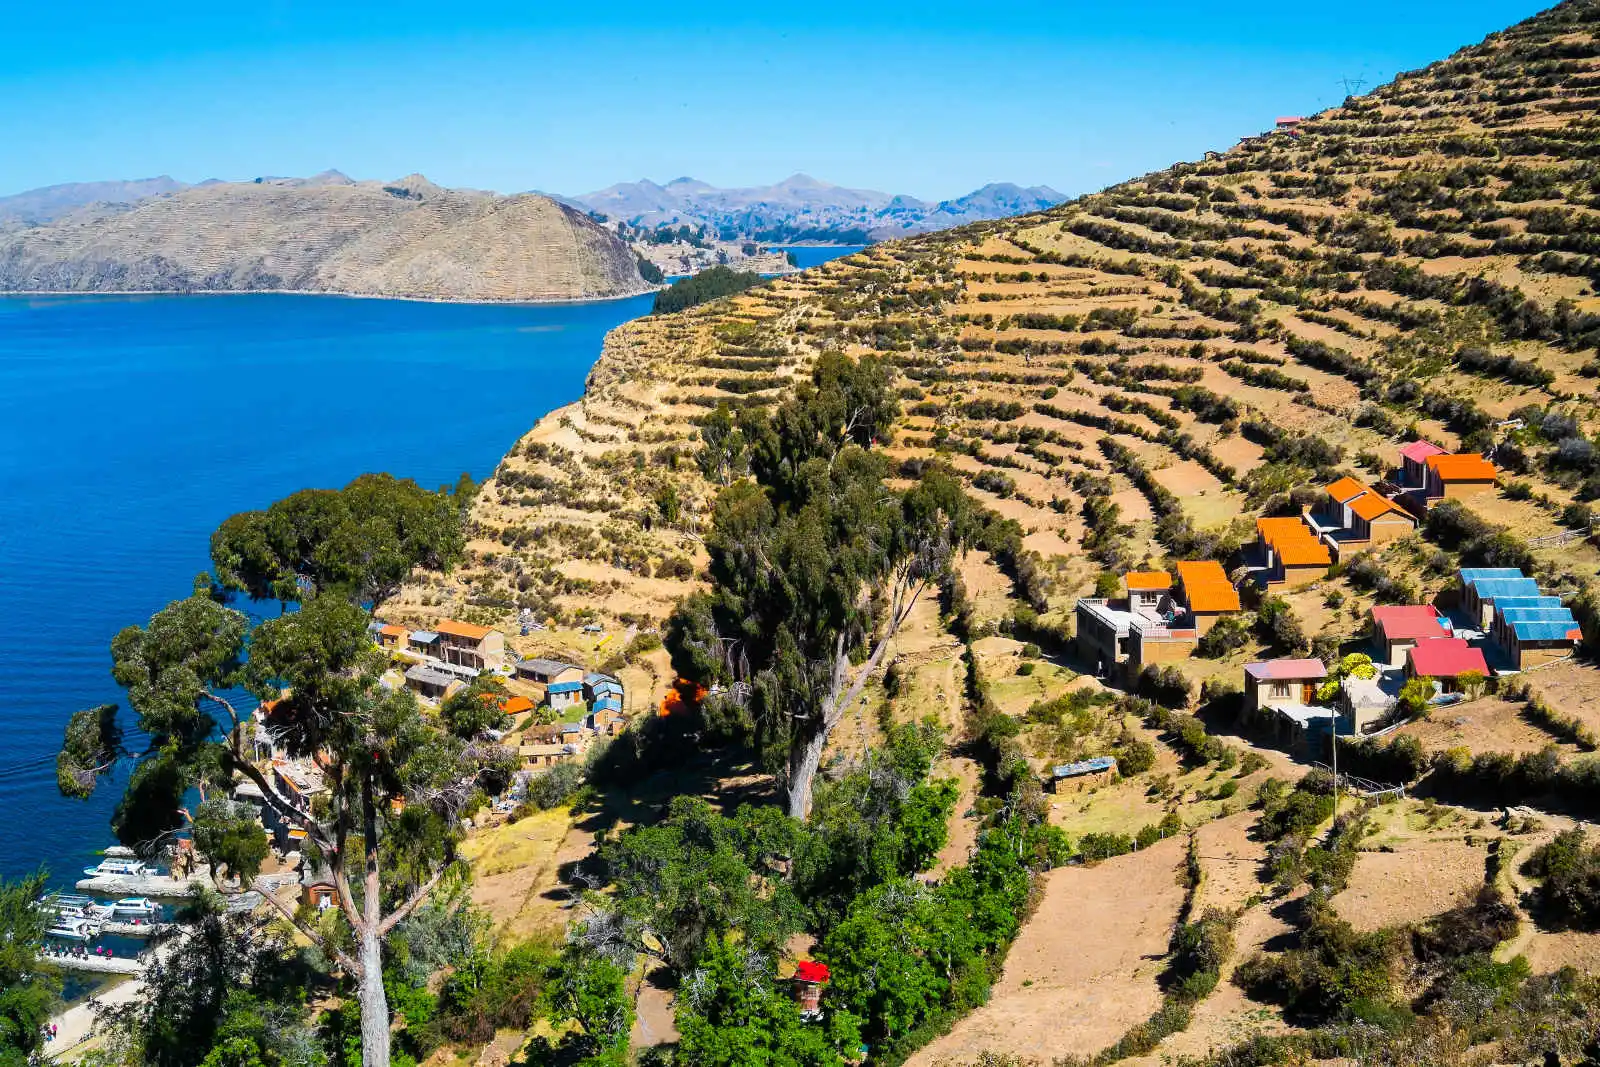 Village de Yumani, Isla del Sol (Ile du Soleil), Lac Titicaca, Bolivie